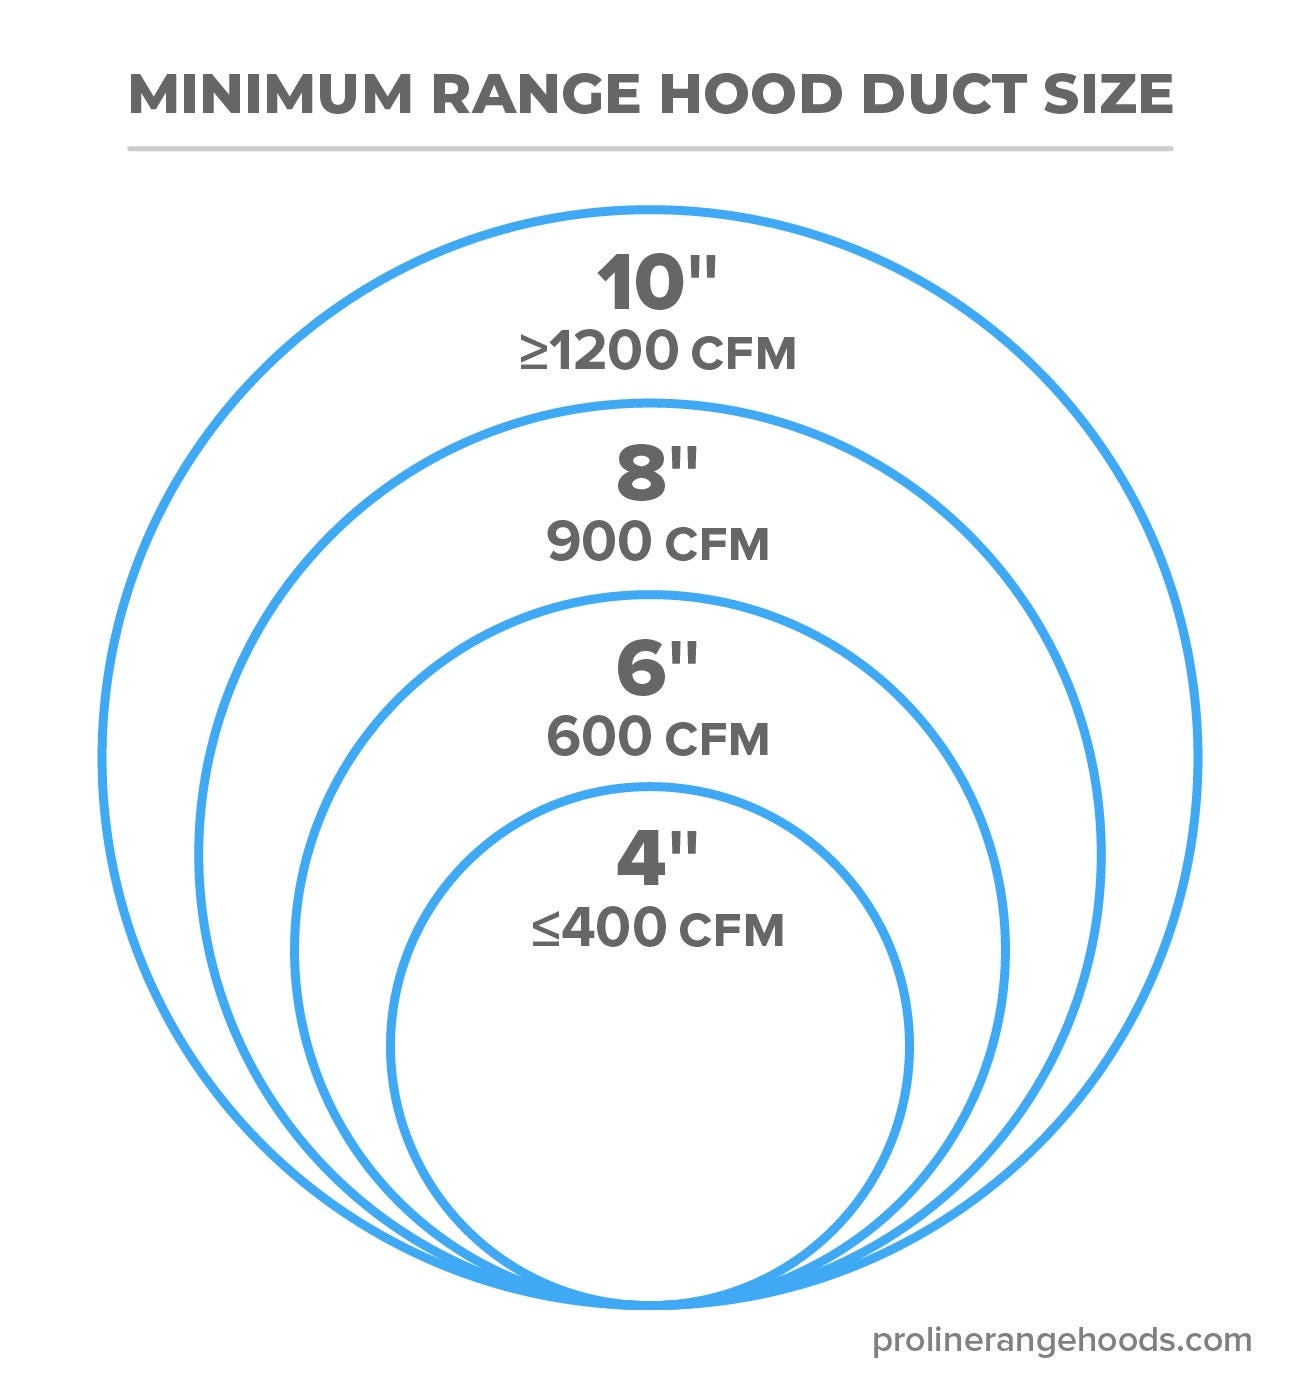 Minimum range hood duct size - Proline Range Hoods - prolinerangehoods.com 